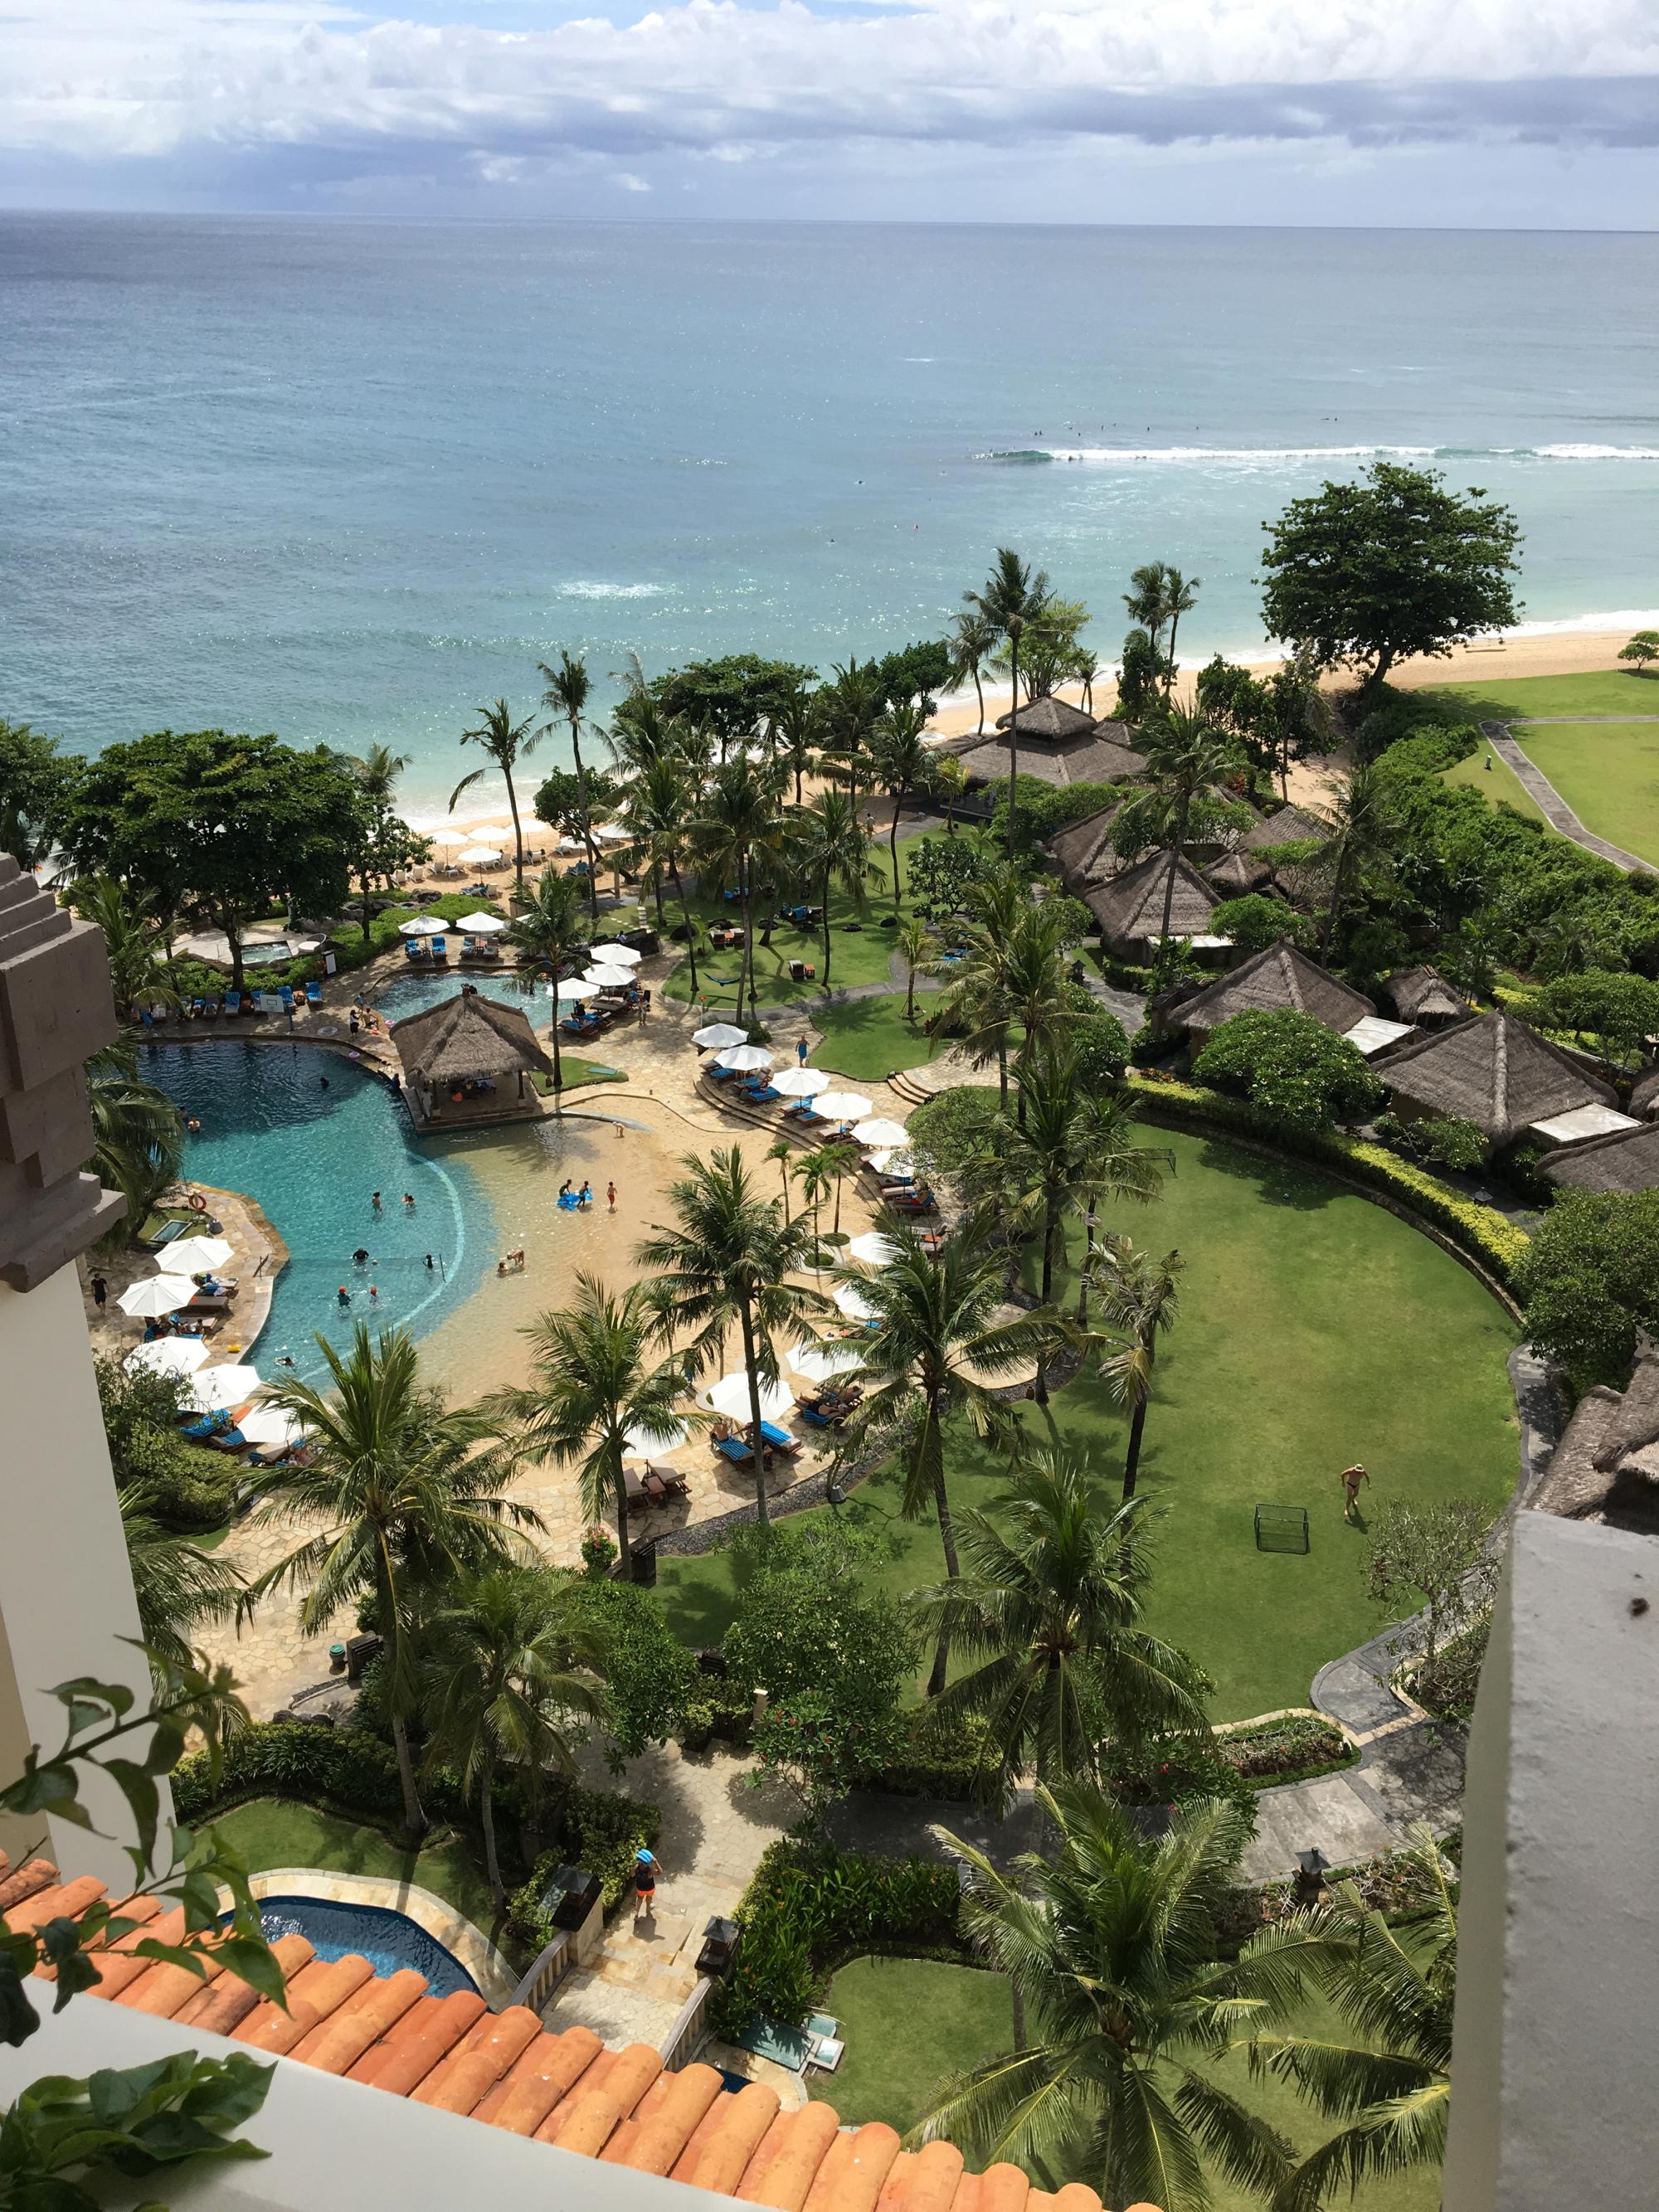 Bali - Room View